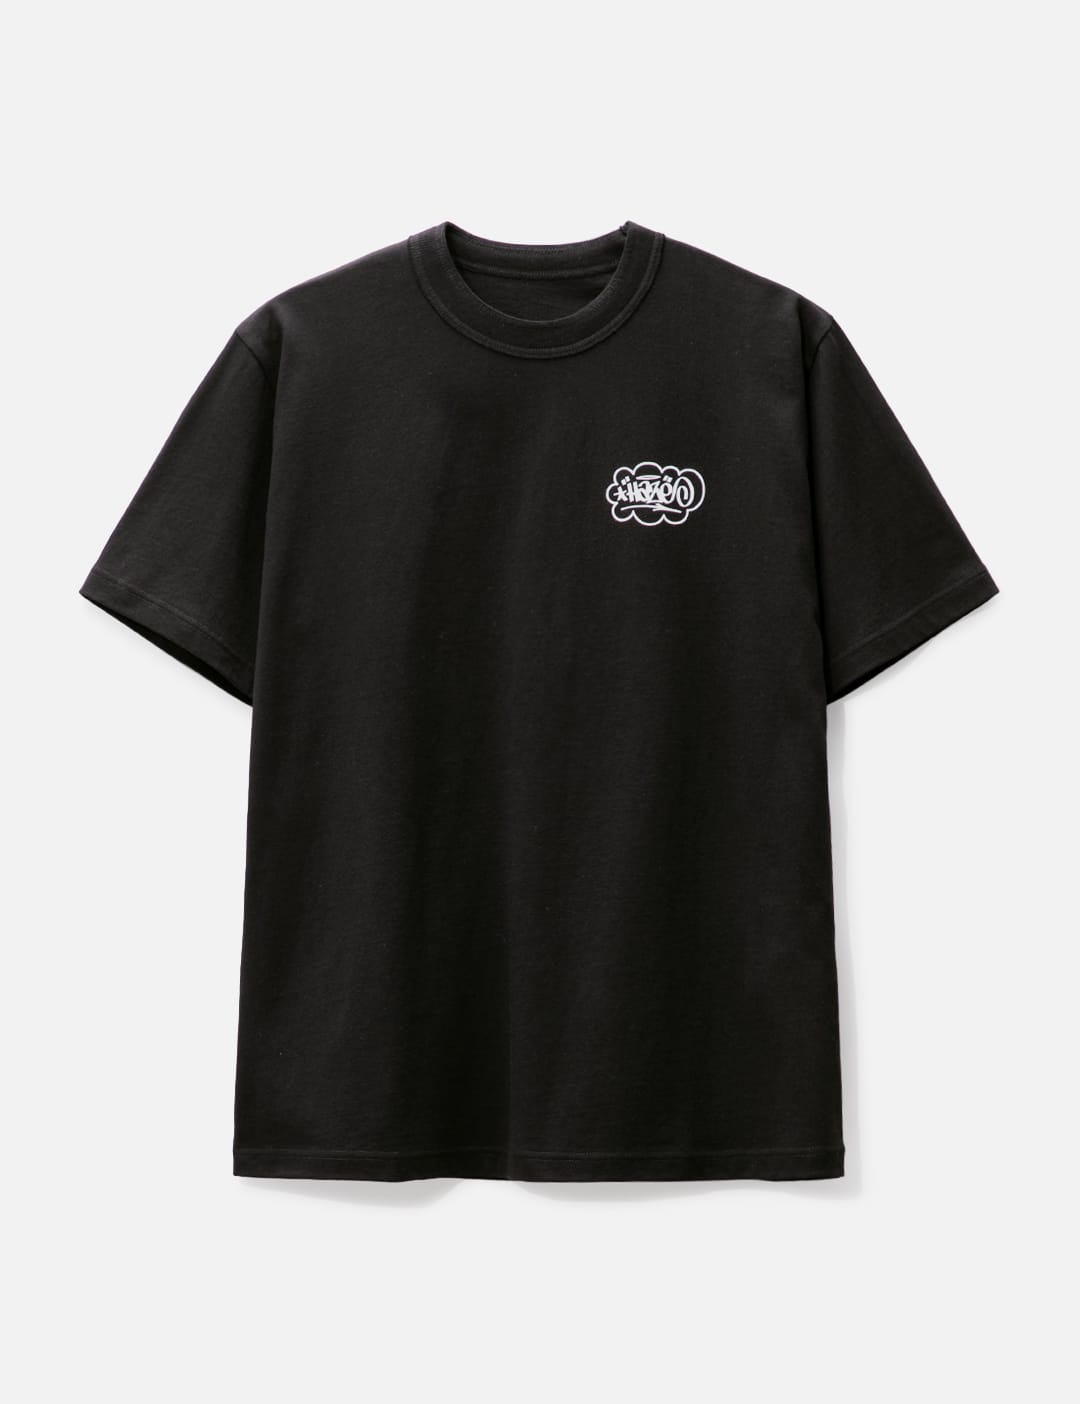 Sacai - Sacai x Eric Haze One Kind Word T-shirt | HBX - Globally